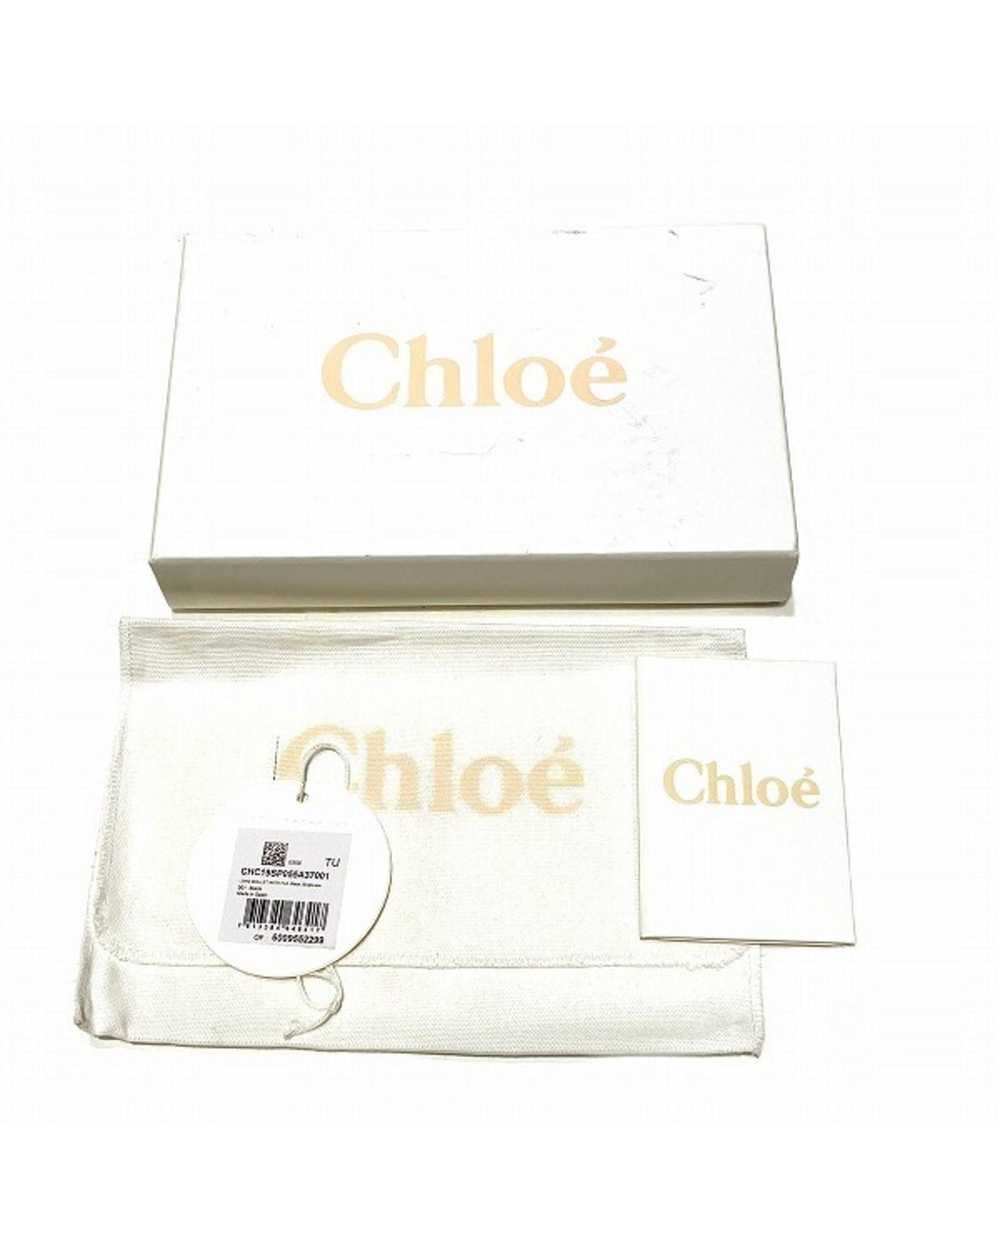 Chloe Refined Black Leather Long Wallet for Women - image 6